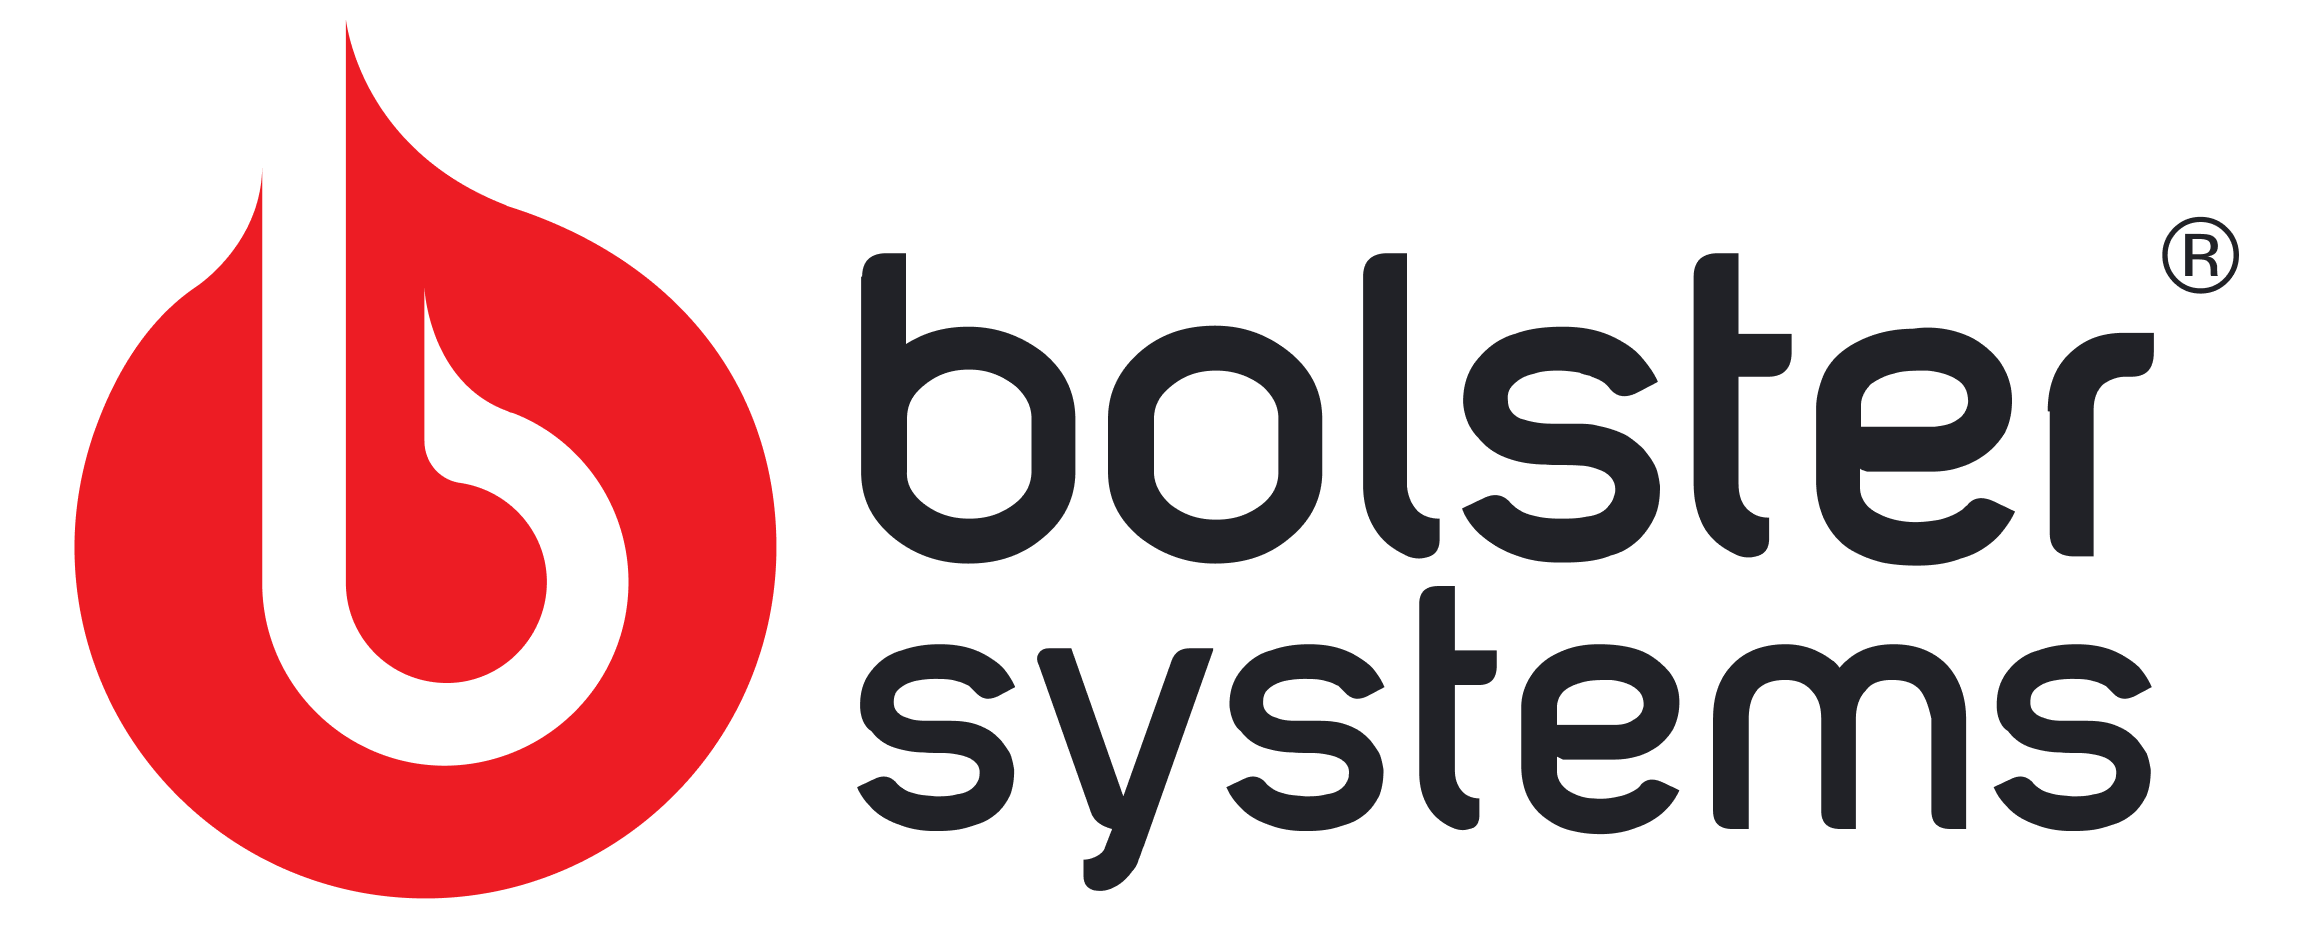 Bolster Systems Ltd